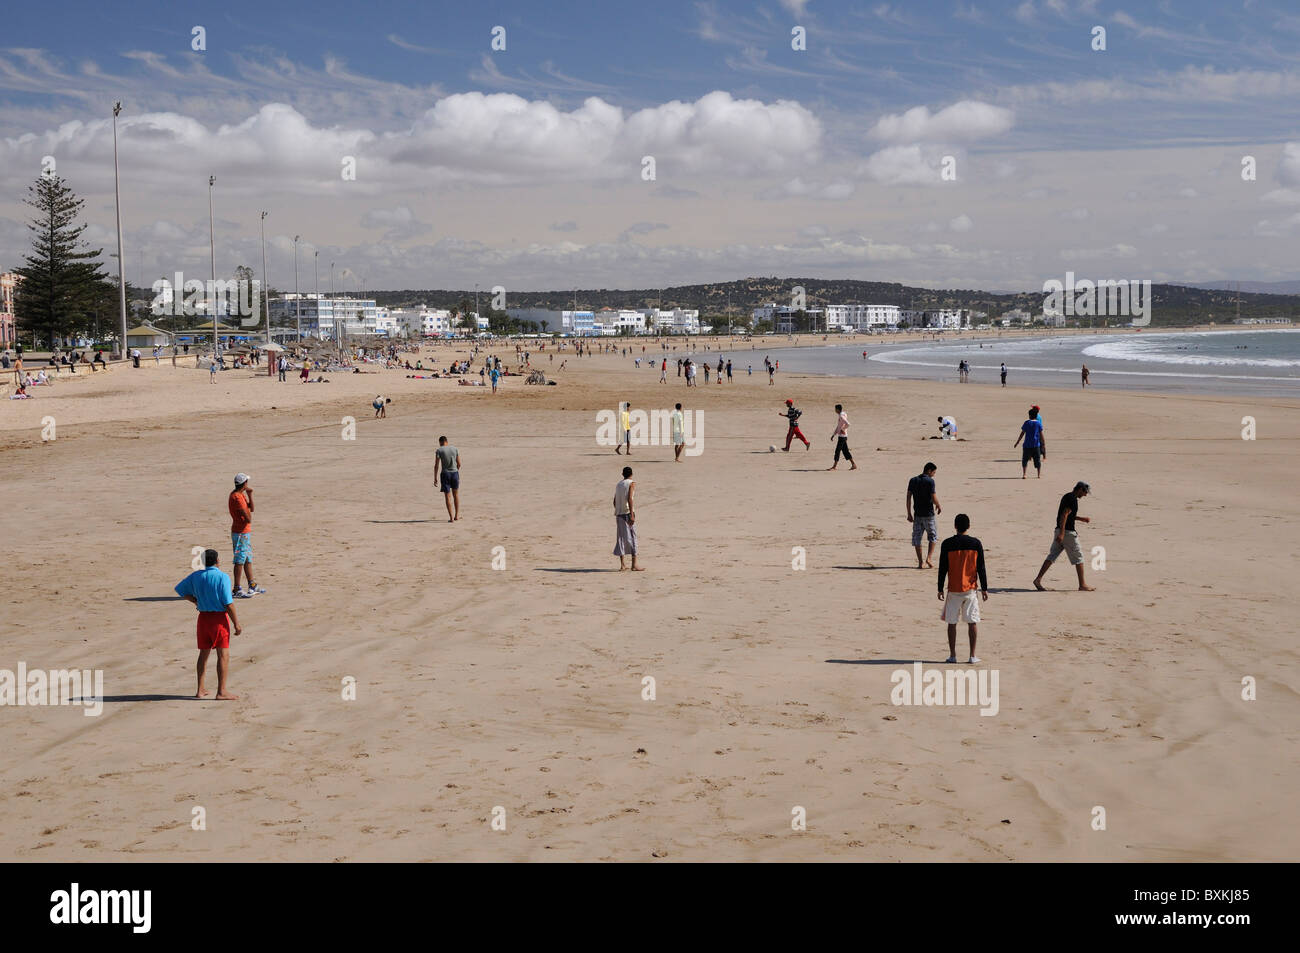 Fußballspiel, Strand Stockfoto